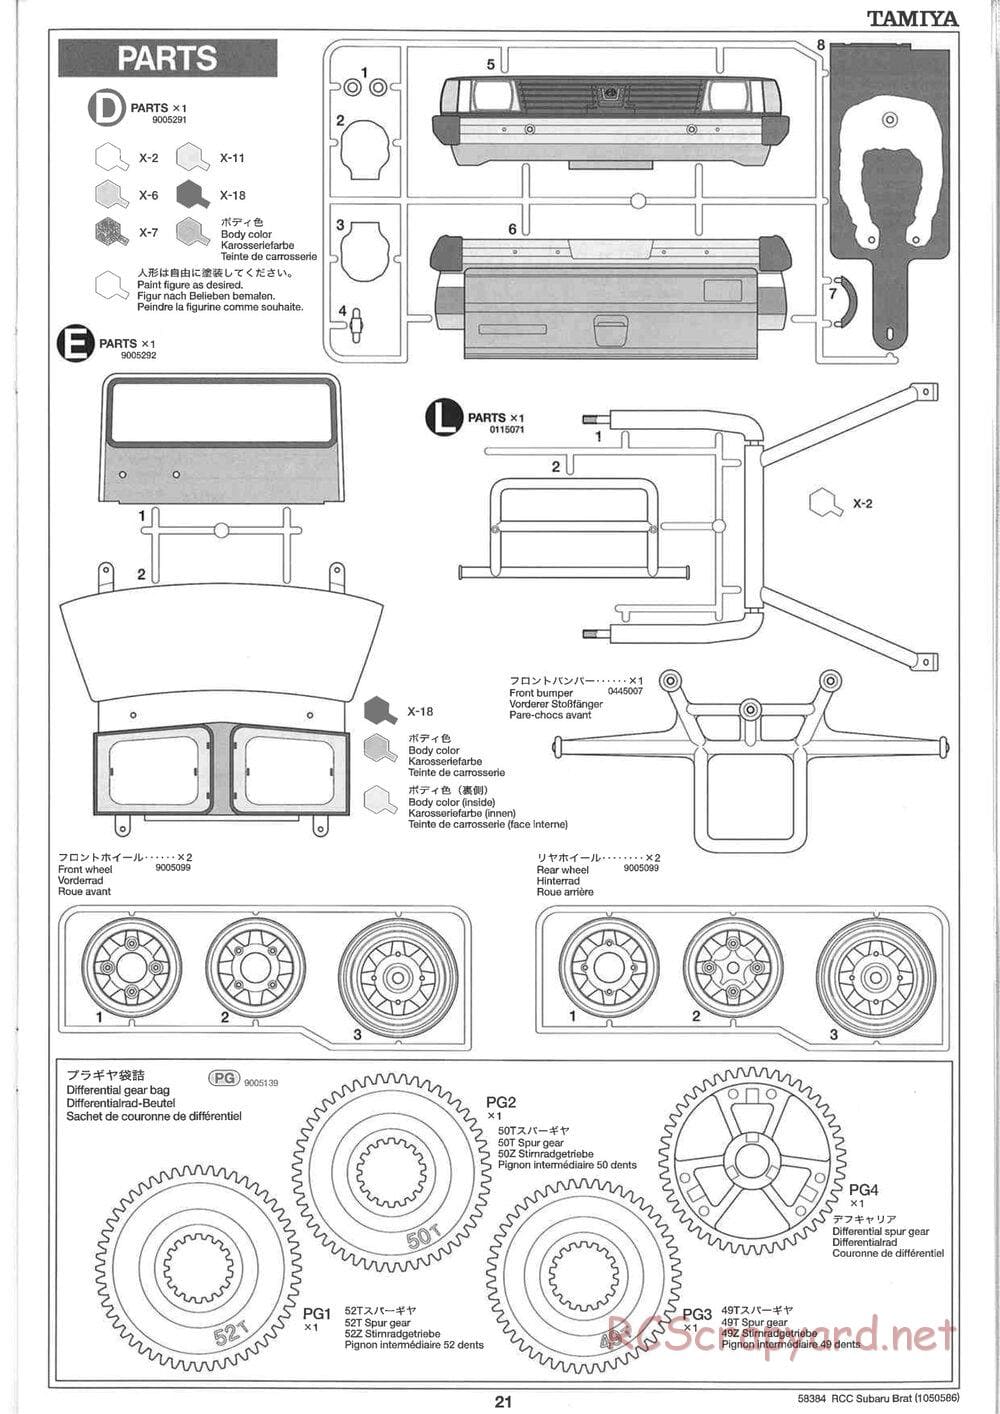 Tamiya - Subaru Brat 2007 - ORV Chassis - Manual - Page 21